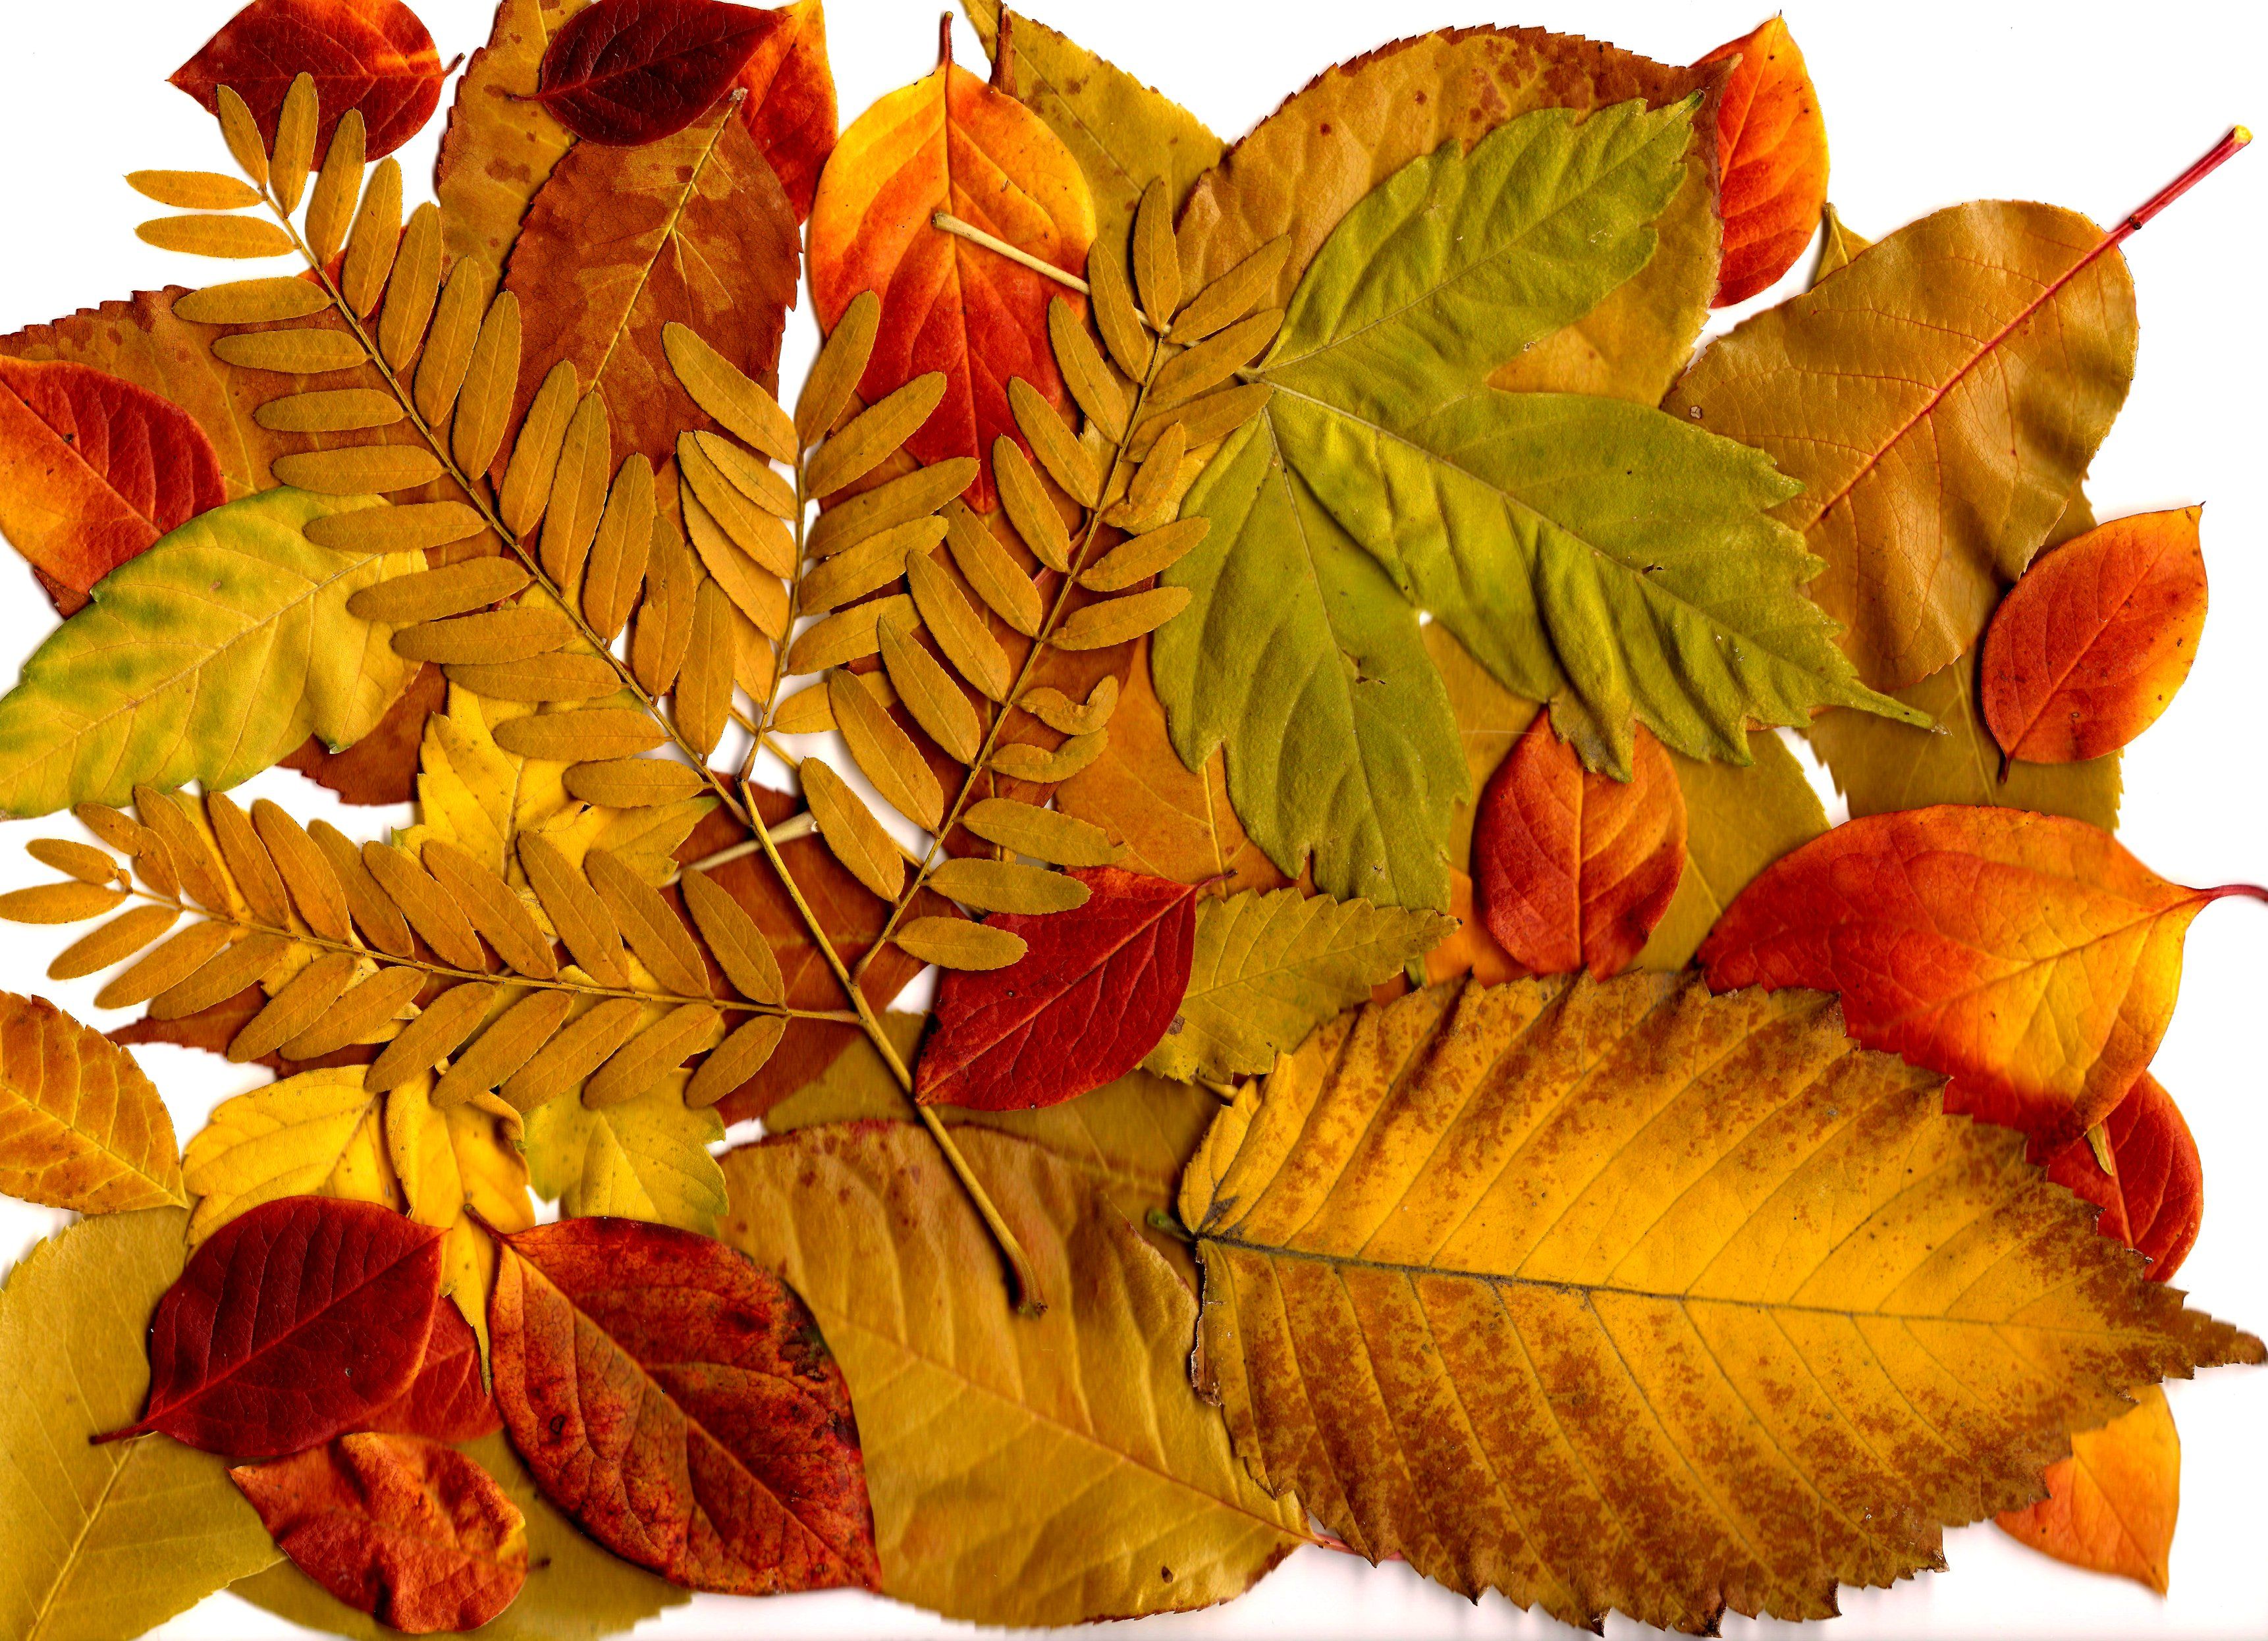 Autumn Leaves Collage Picture. Free Photograph. Photo Public Domain